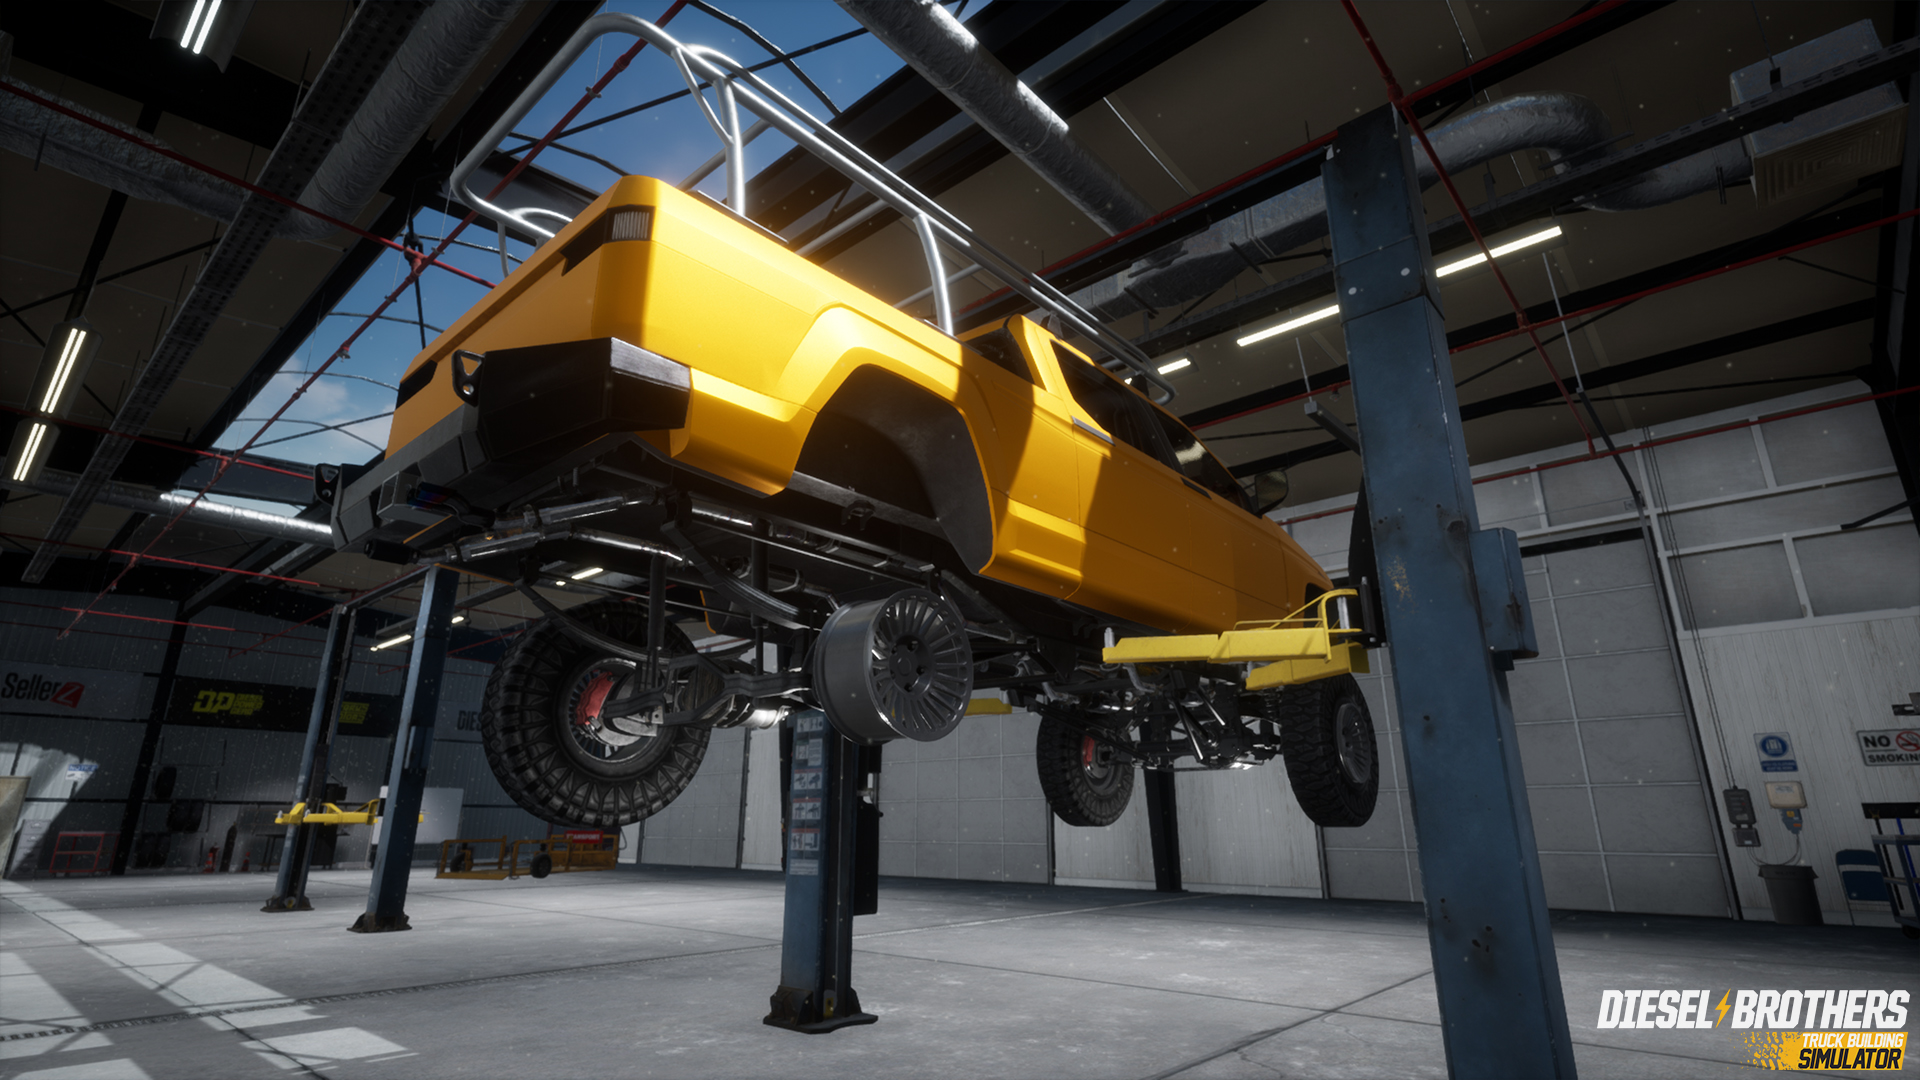 Diesel Brothers: Truck Building Simulator screenshot